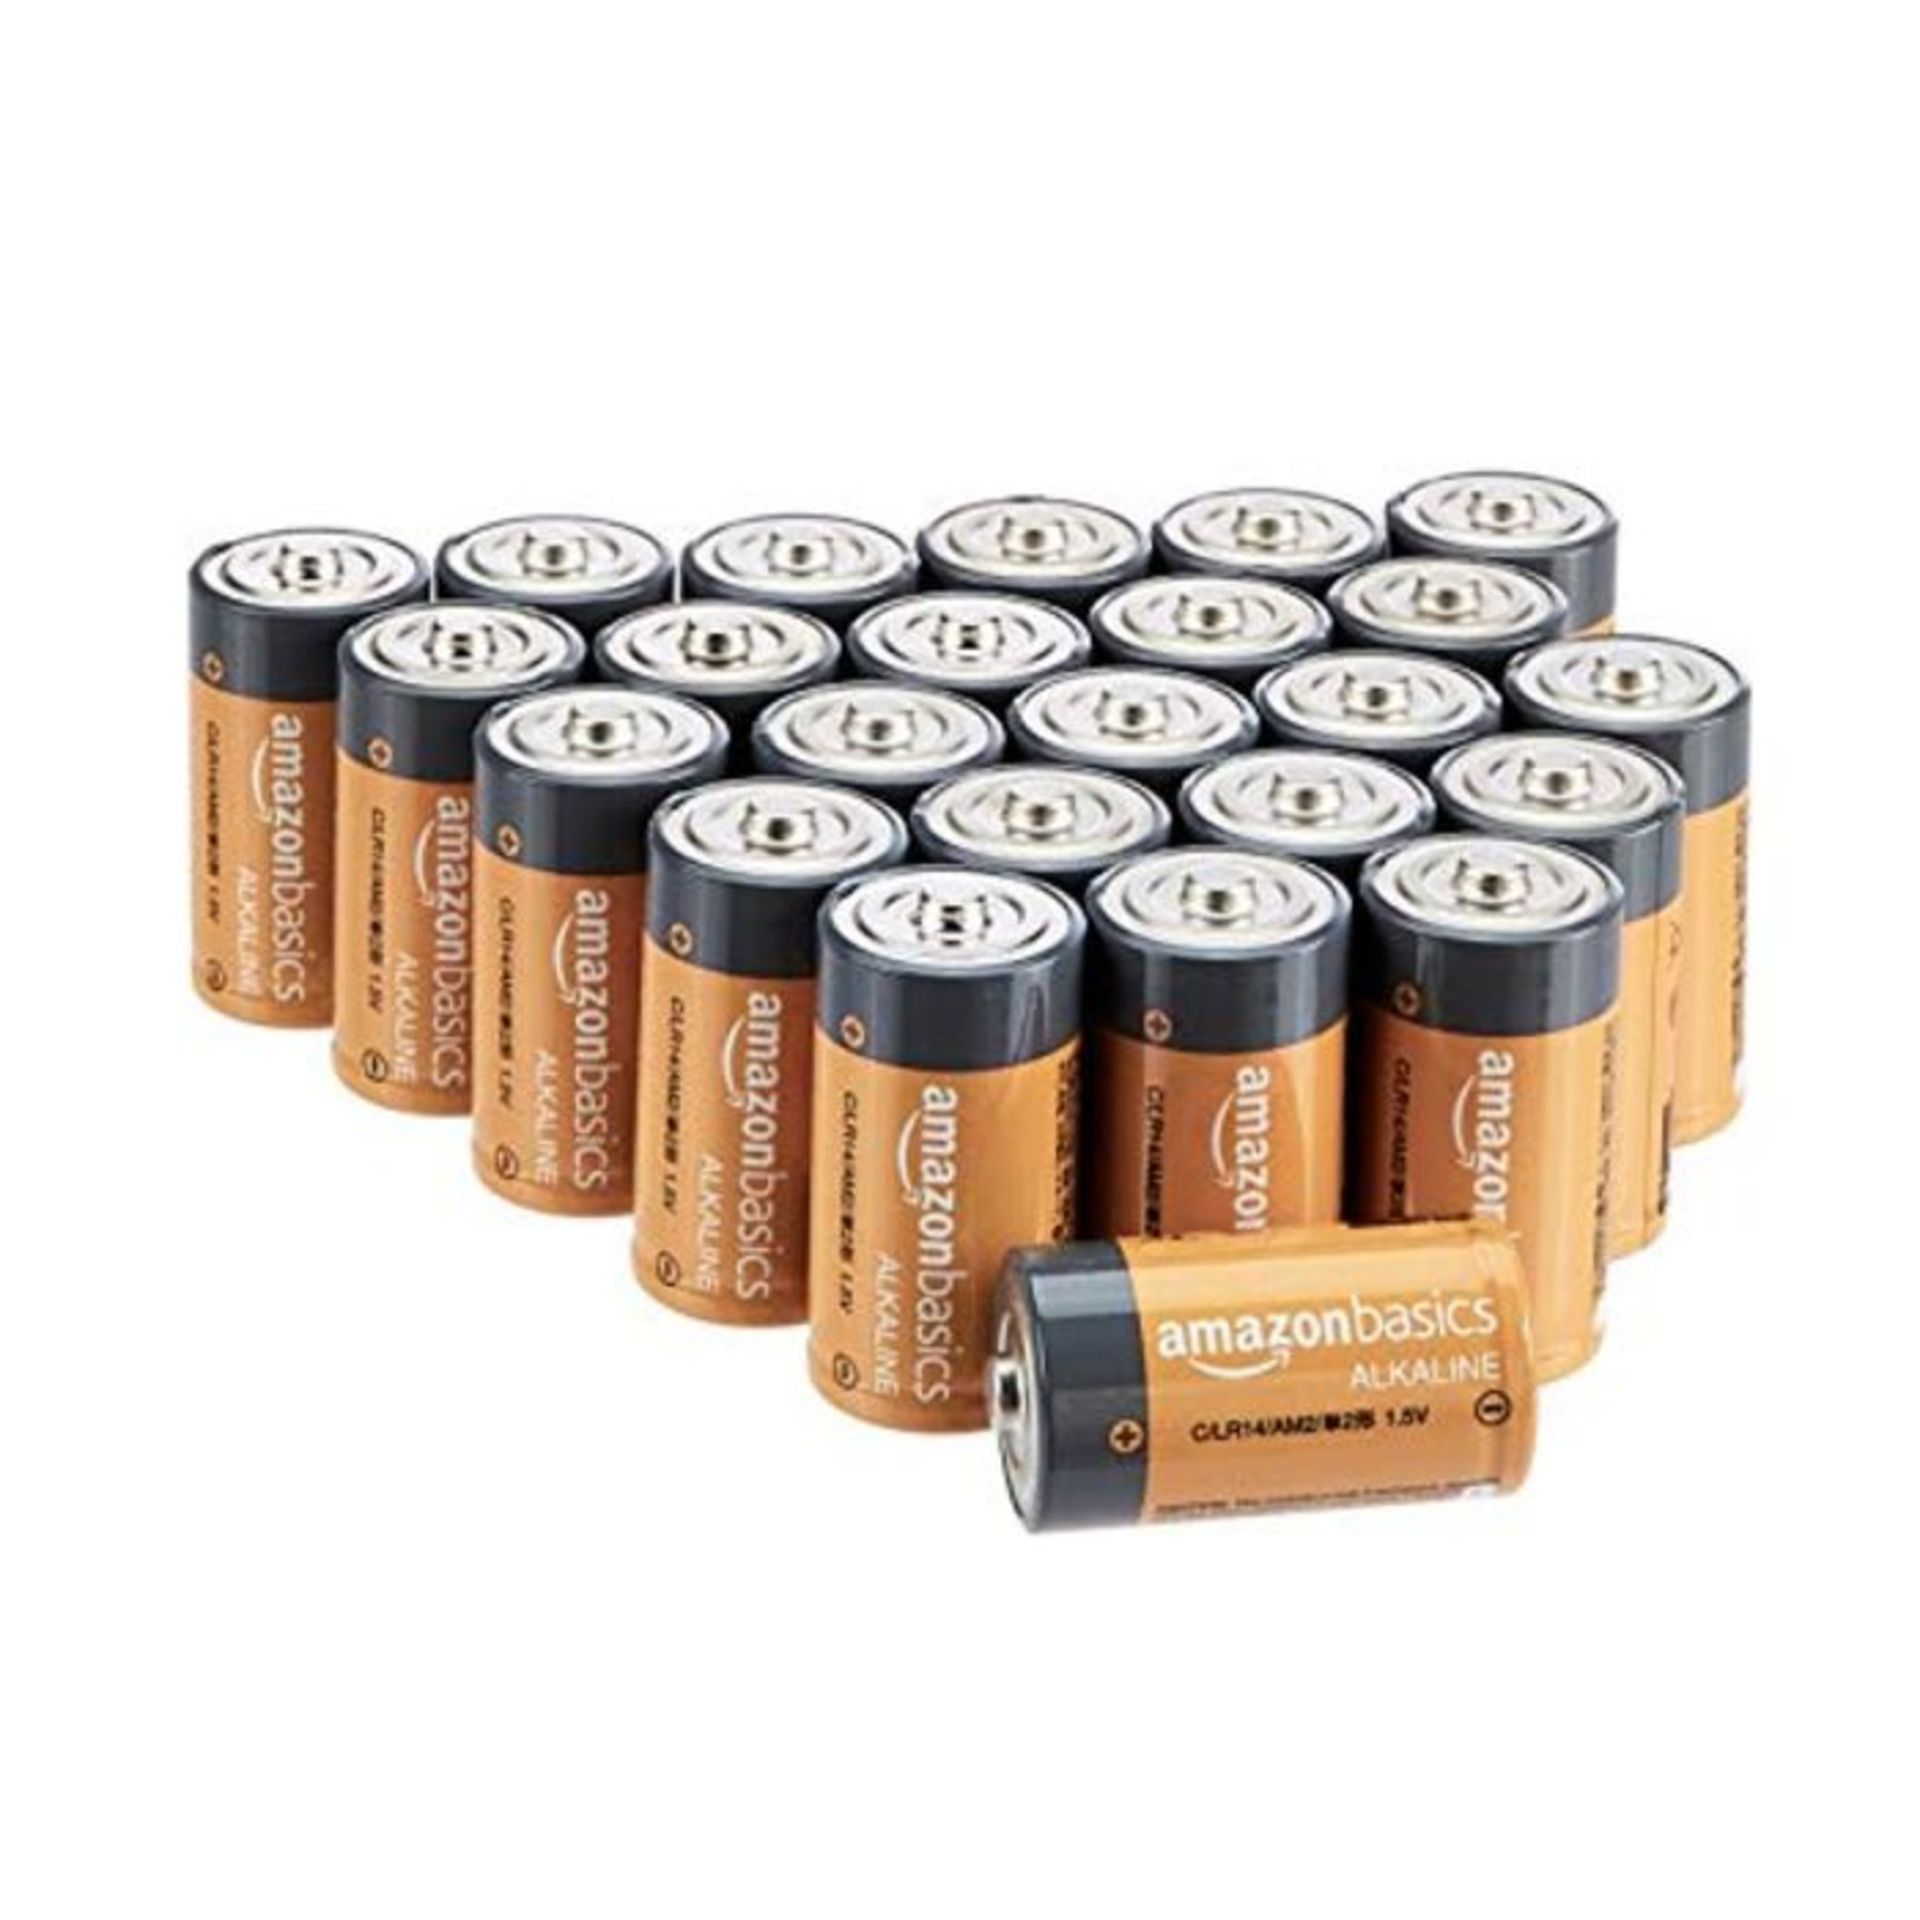 Amazon Basics C Cell 1.5 Volt Everyday Alkaline Batteries - Pack of 24